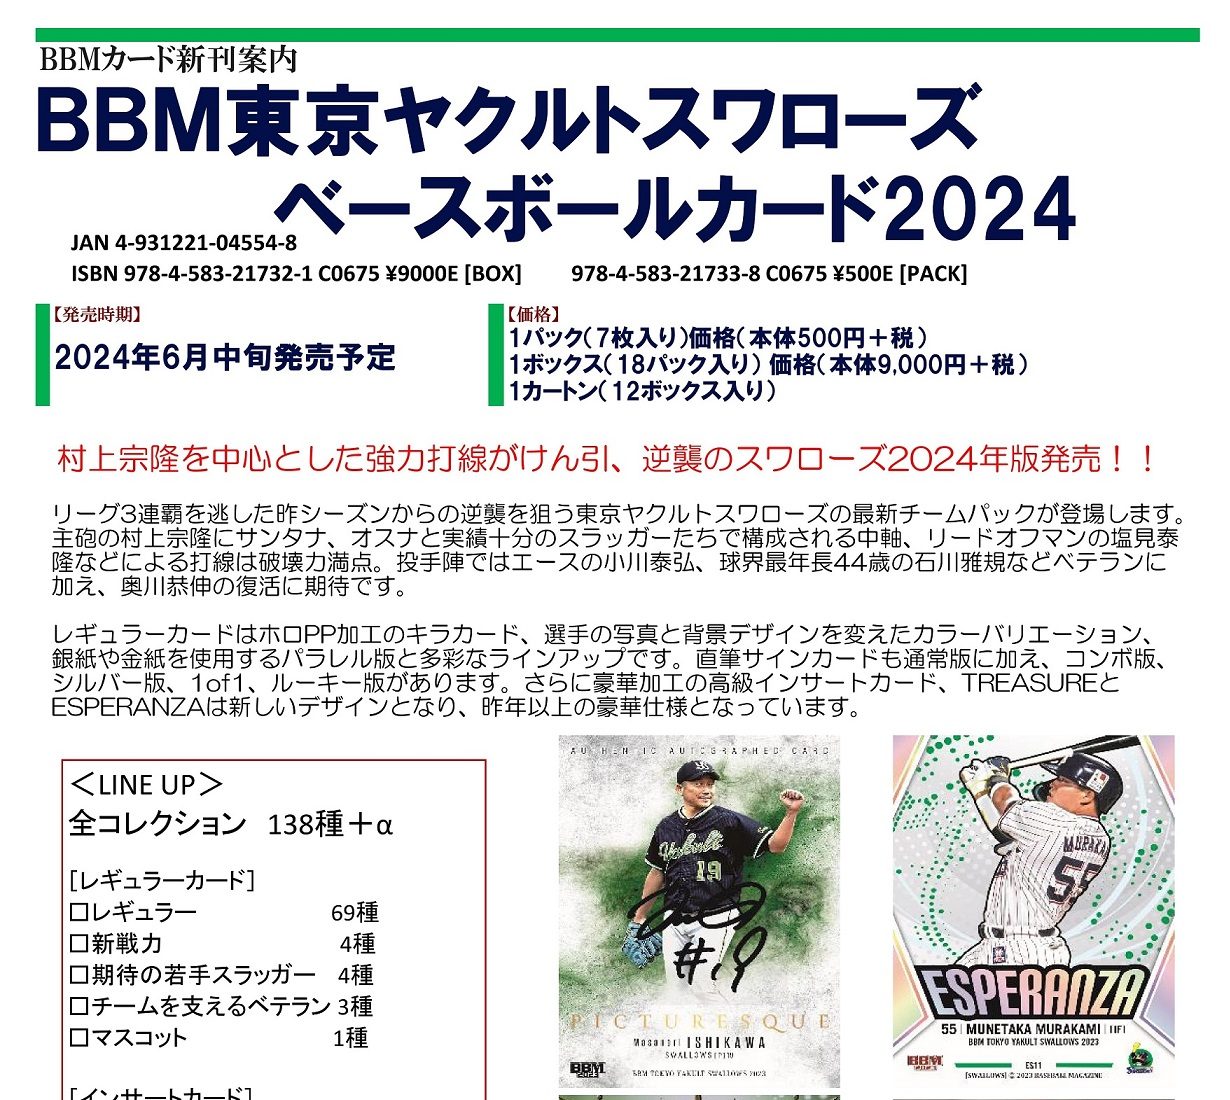 BBM ﾚｷﾞｭﾗｰｶｰﾄﾞ BBM2021 東京ヤクルトスワローズ<br> S80[レギュラー